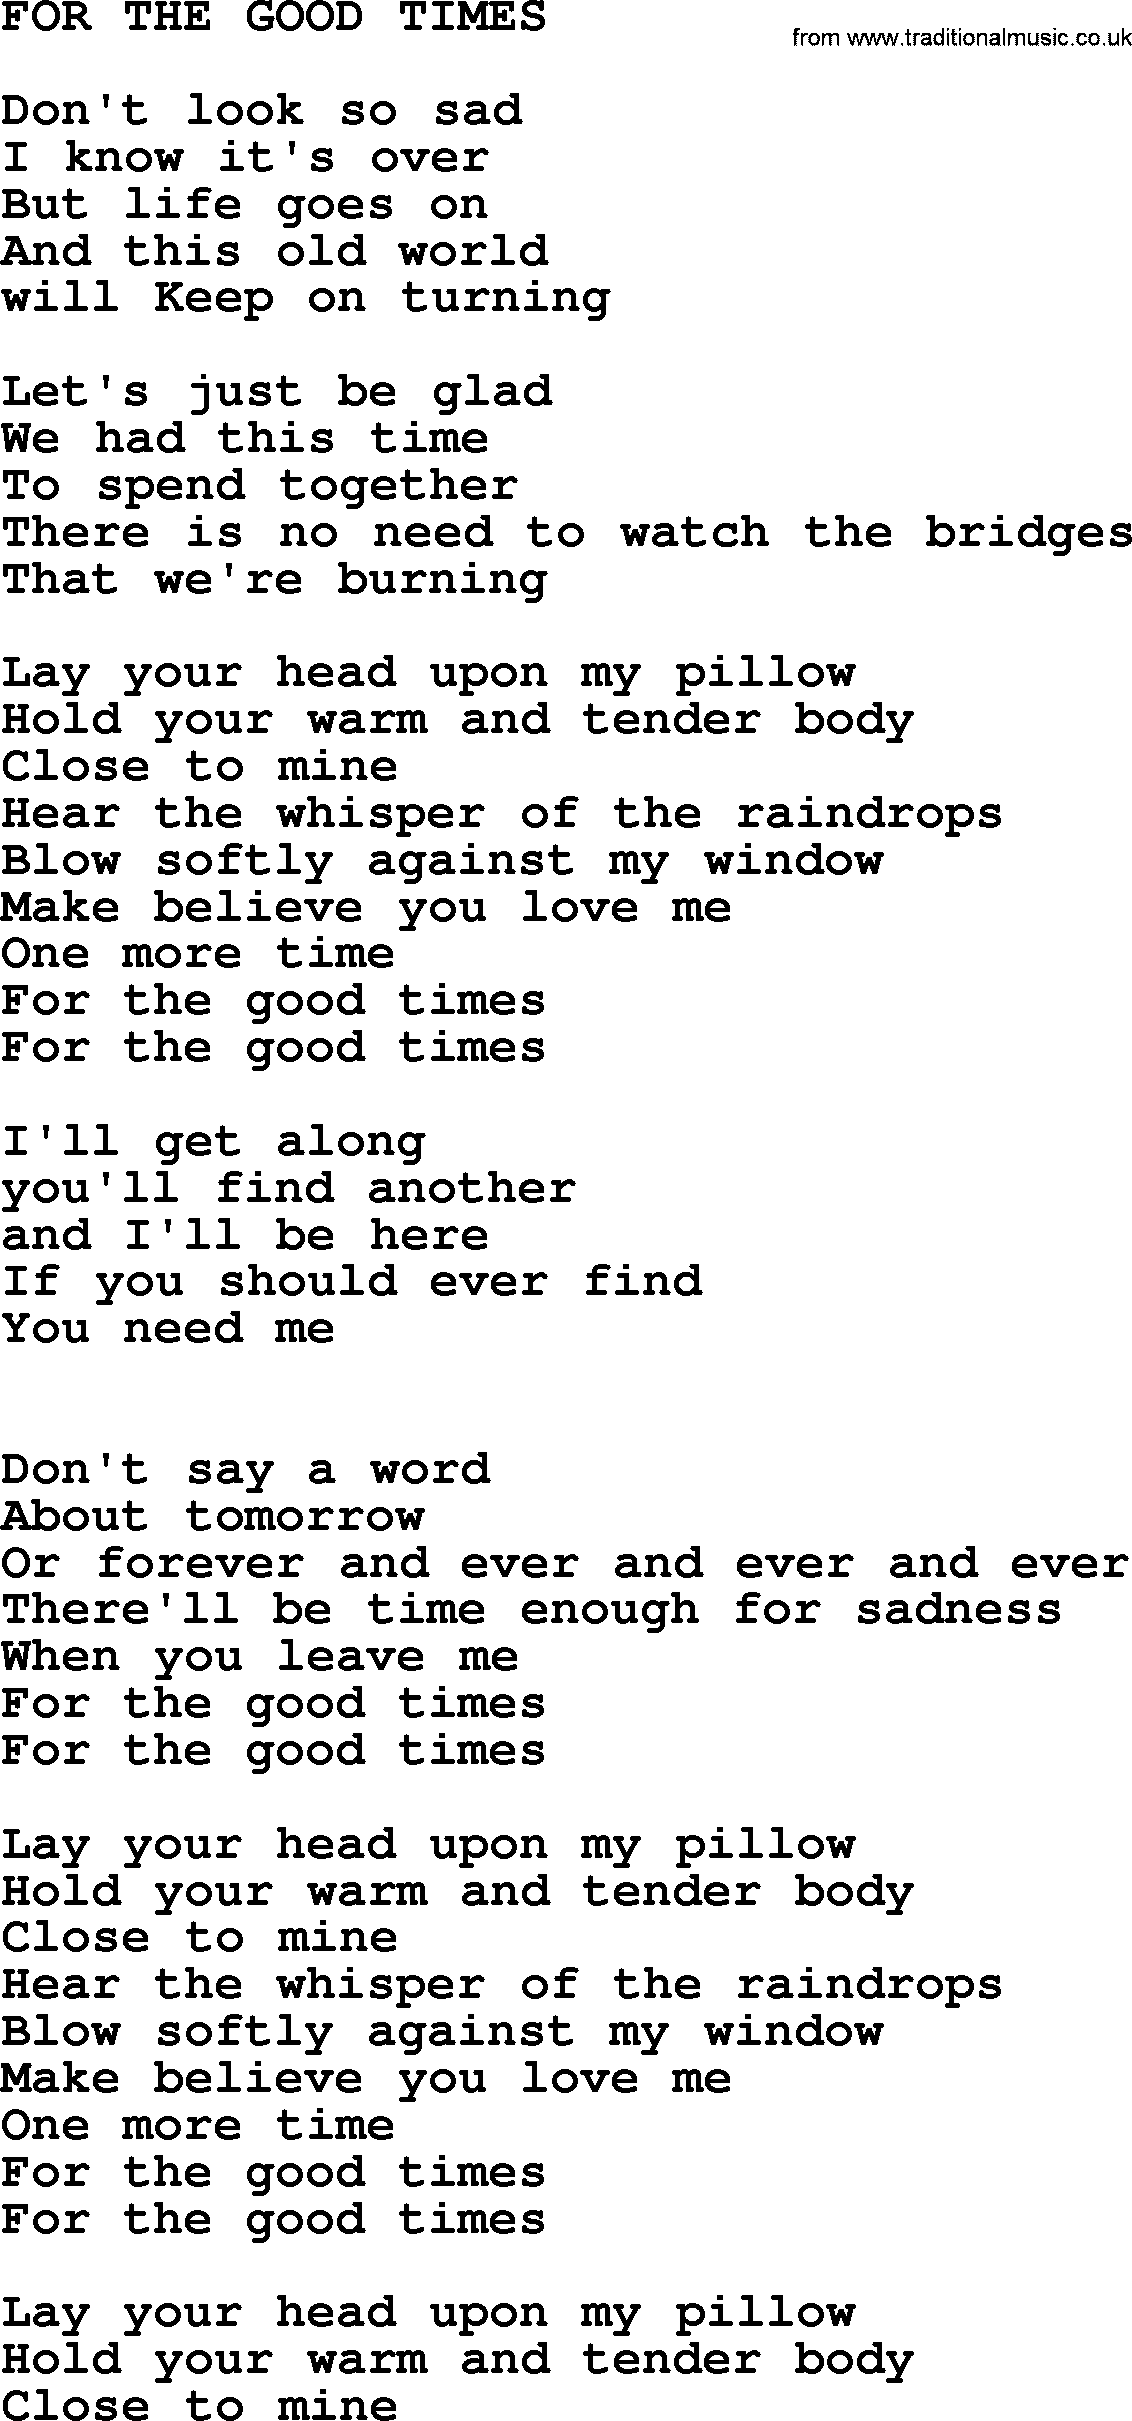 Kris Kristofferson song: For The Good Times lyrics